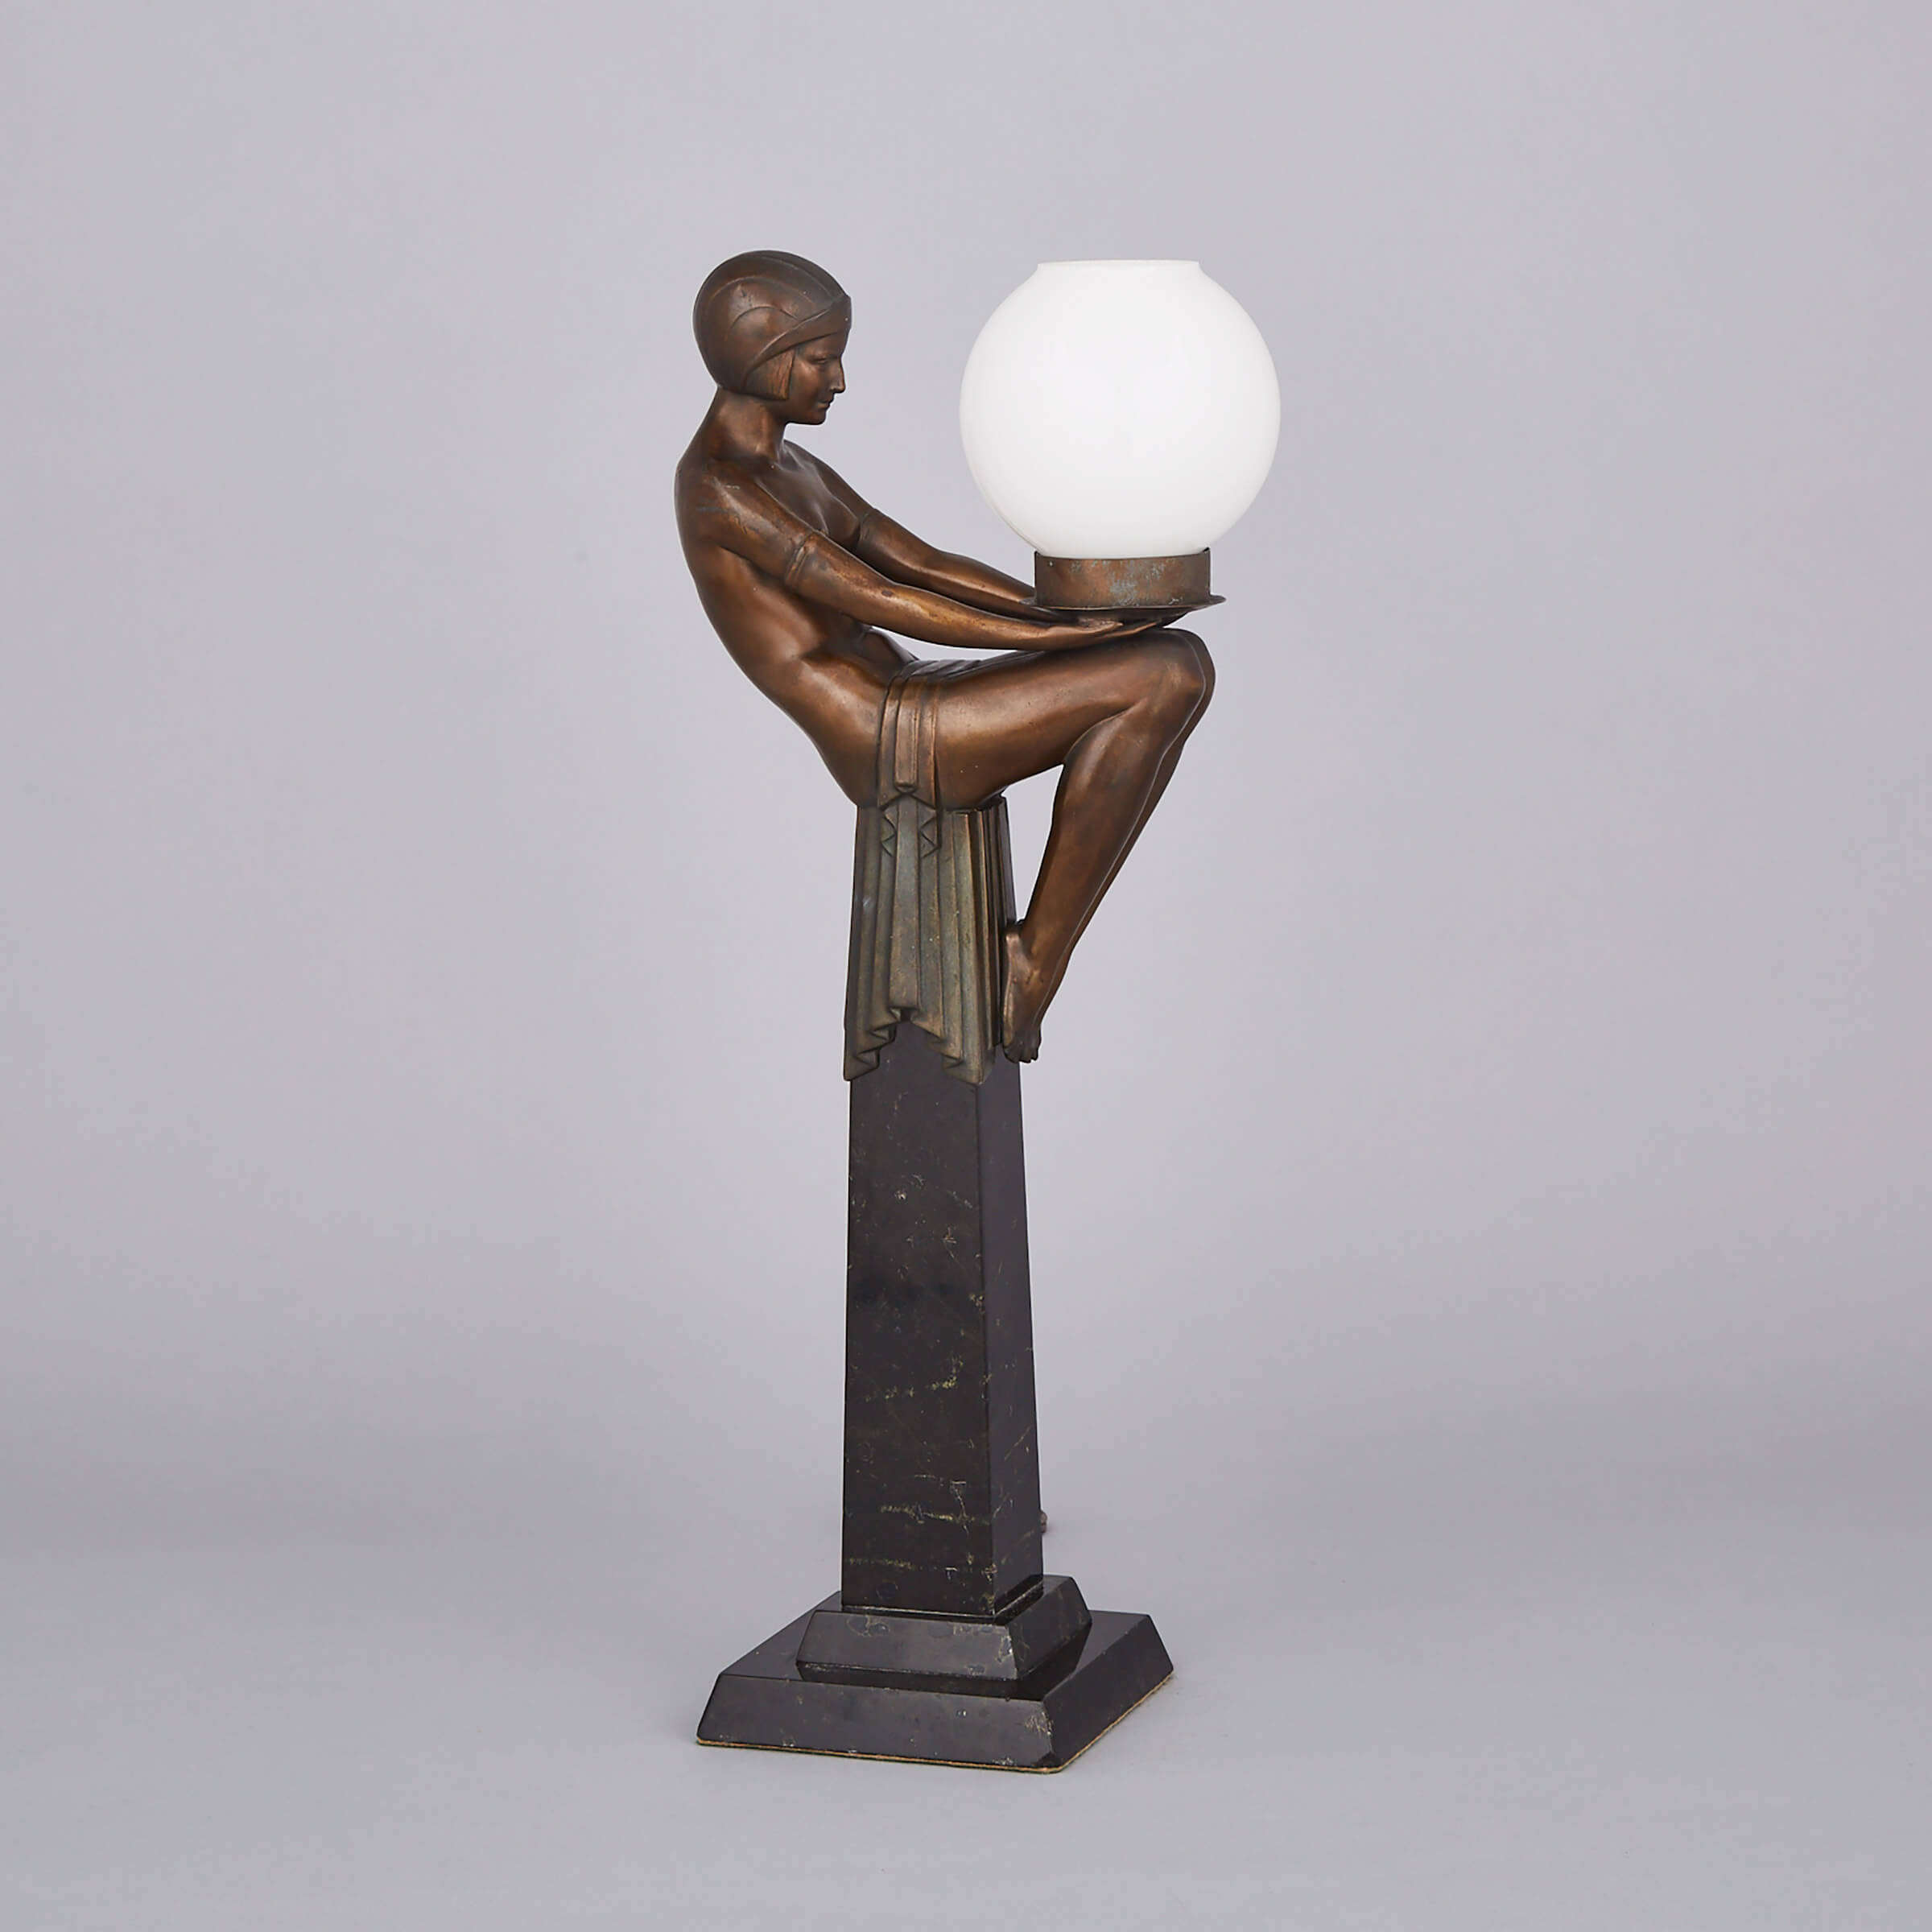 French Art Deco Patinated Metal and Granite Table Lamp, c.1930